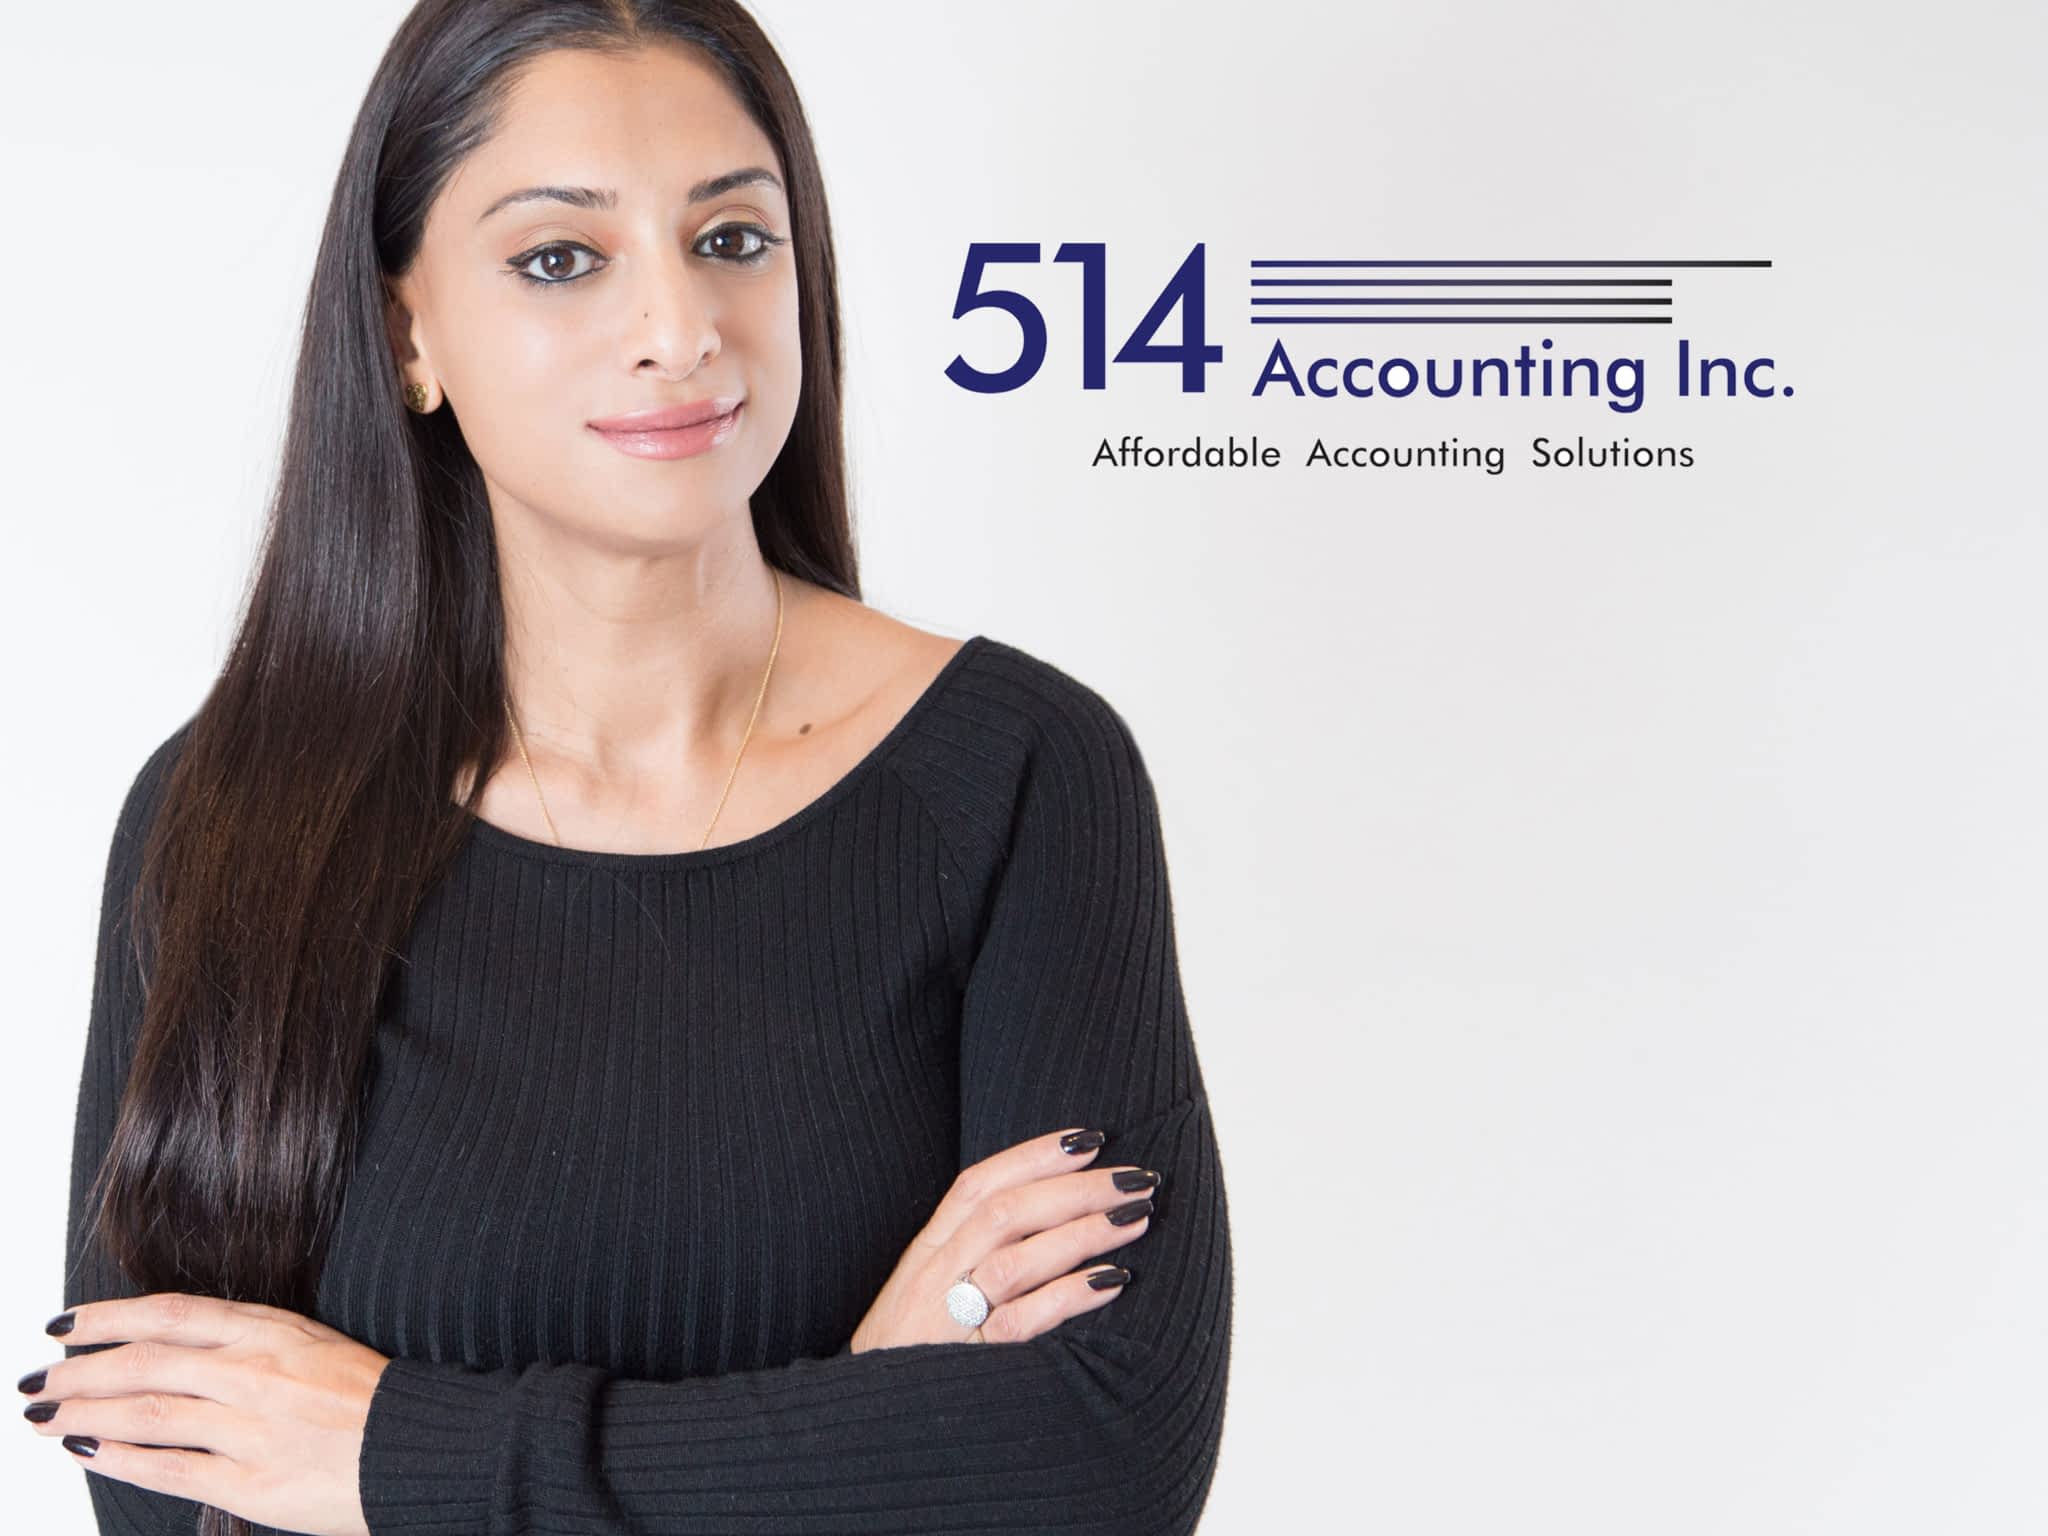 photo 514 Accounting Inc